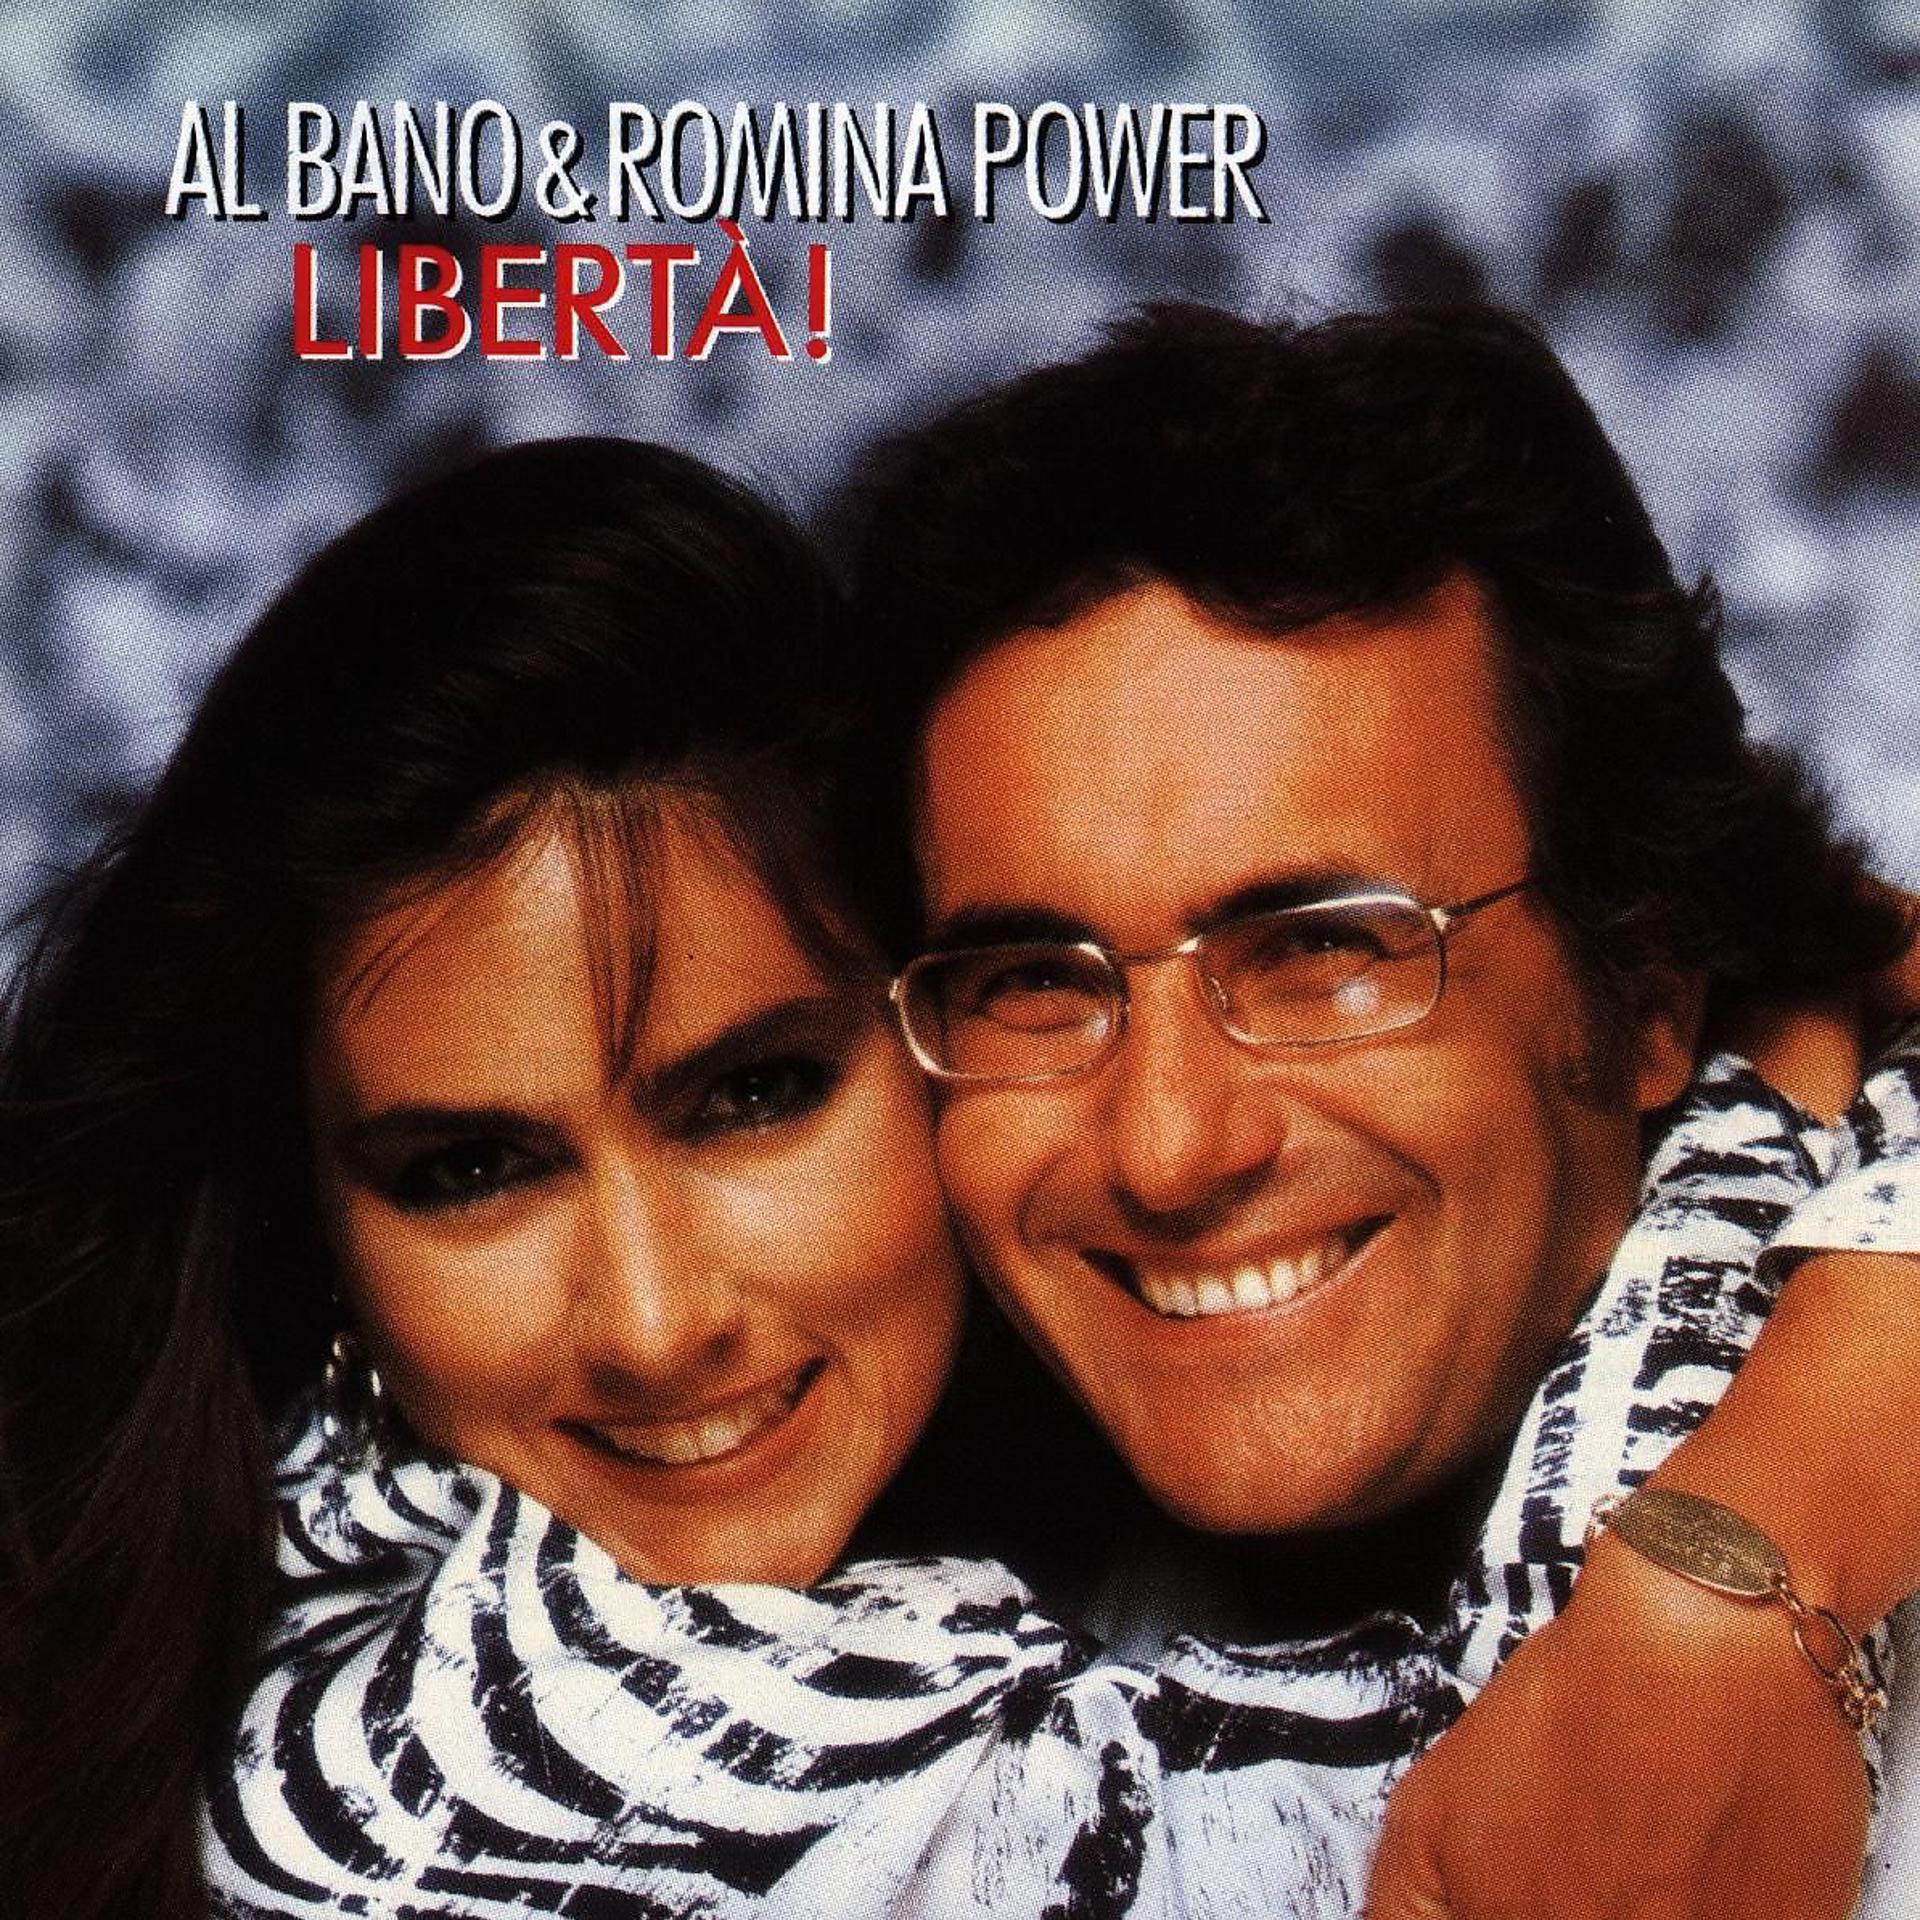 Liberta аль бано. Аль Бано и Ромина Пауэр. Аль Бано и Ромина Liberta. Al bano & Romina Power Liberta 1987 LP. Аль Бано и Ромина - Либерта.